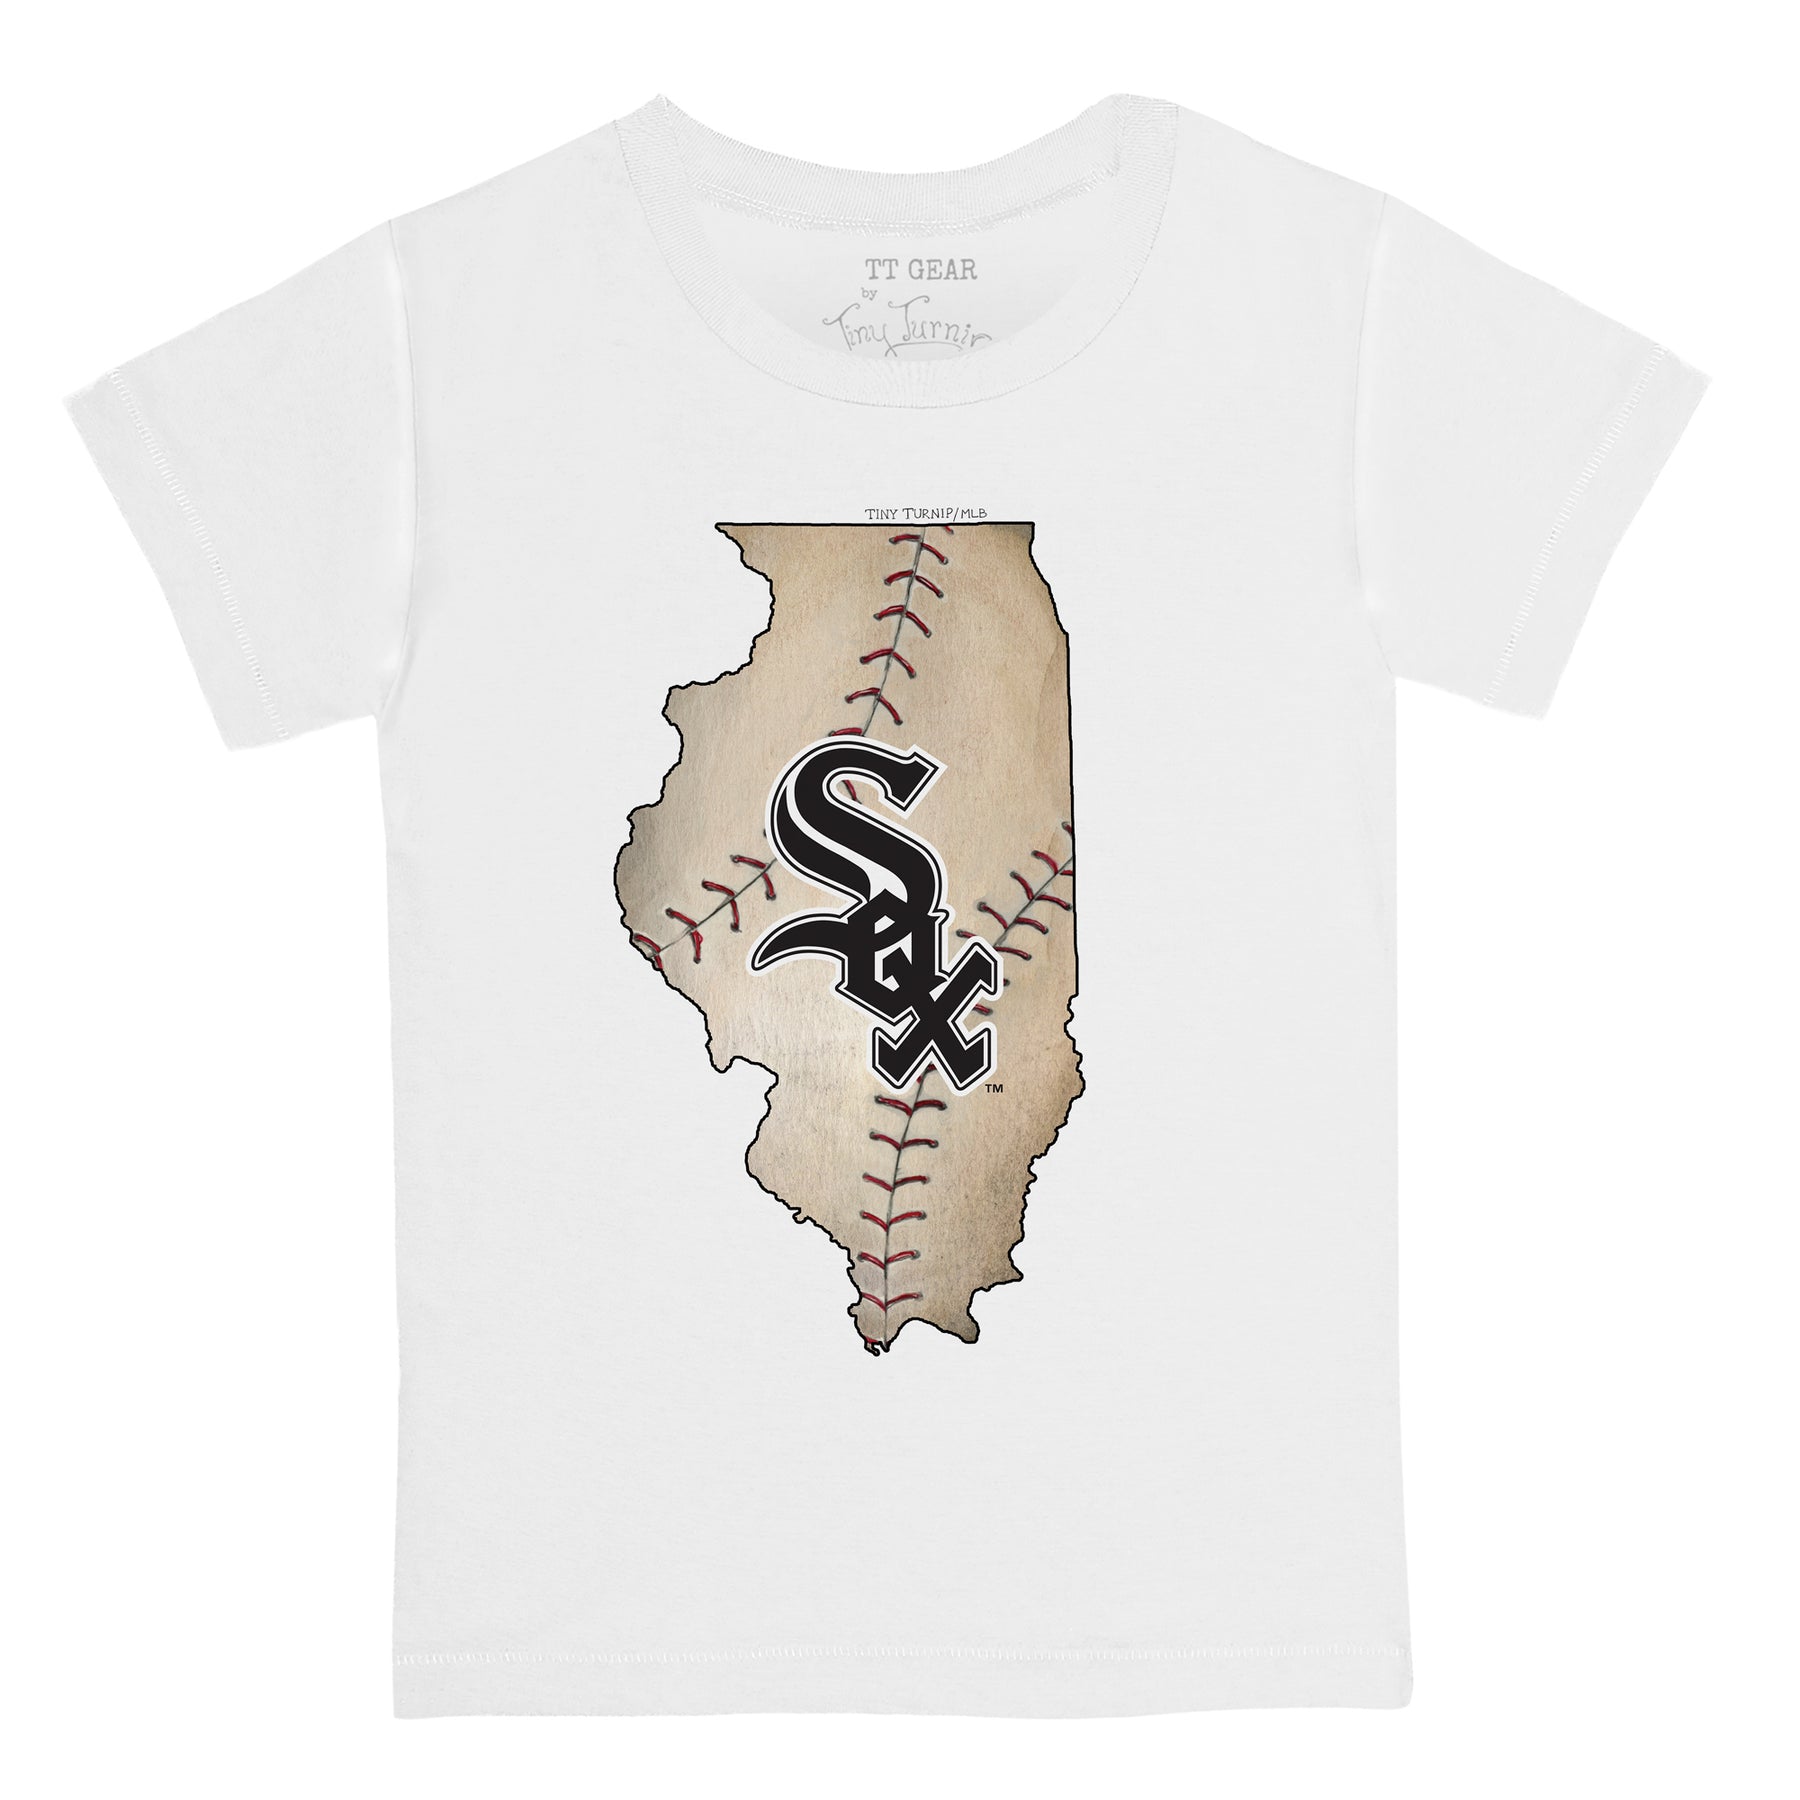 MLB Chicago White Sox Women's Short Sleeve V-Neck Fashion T-Shirt - S